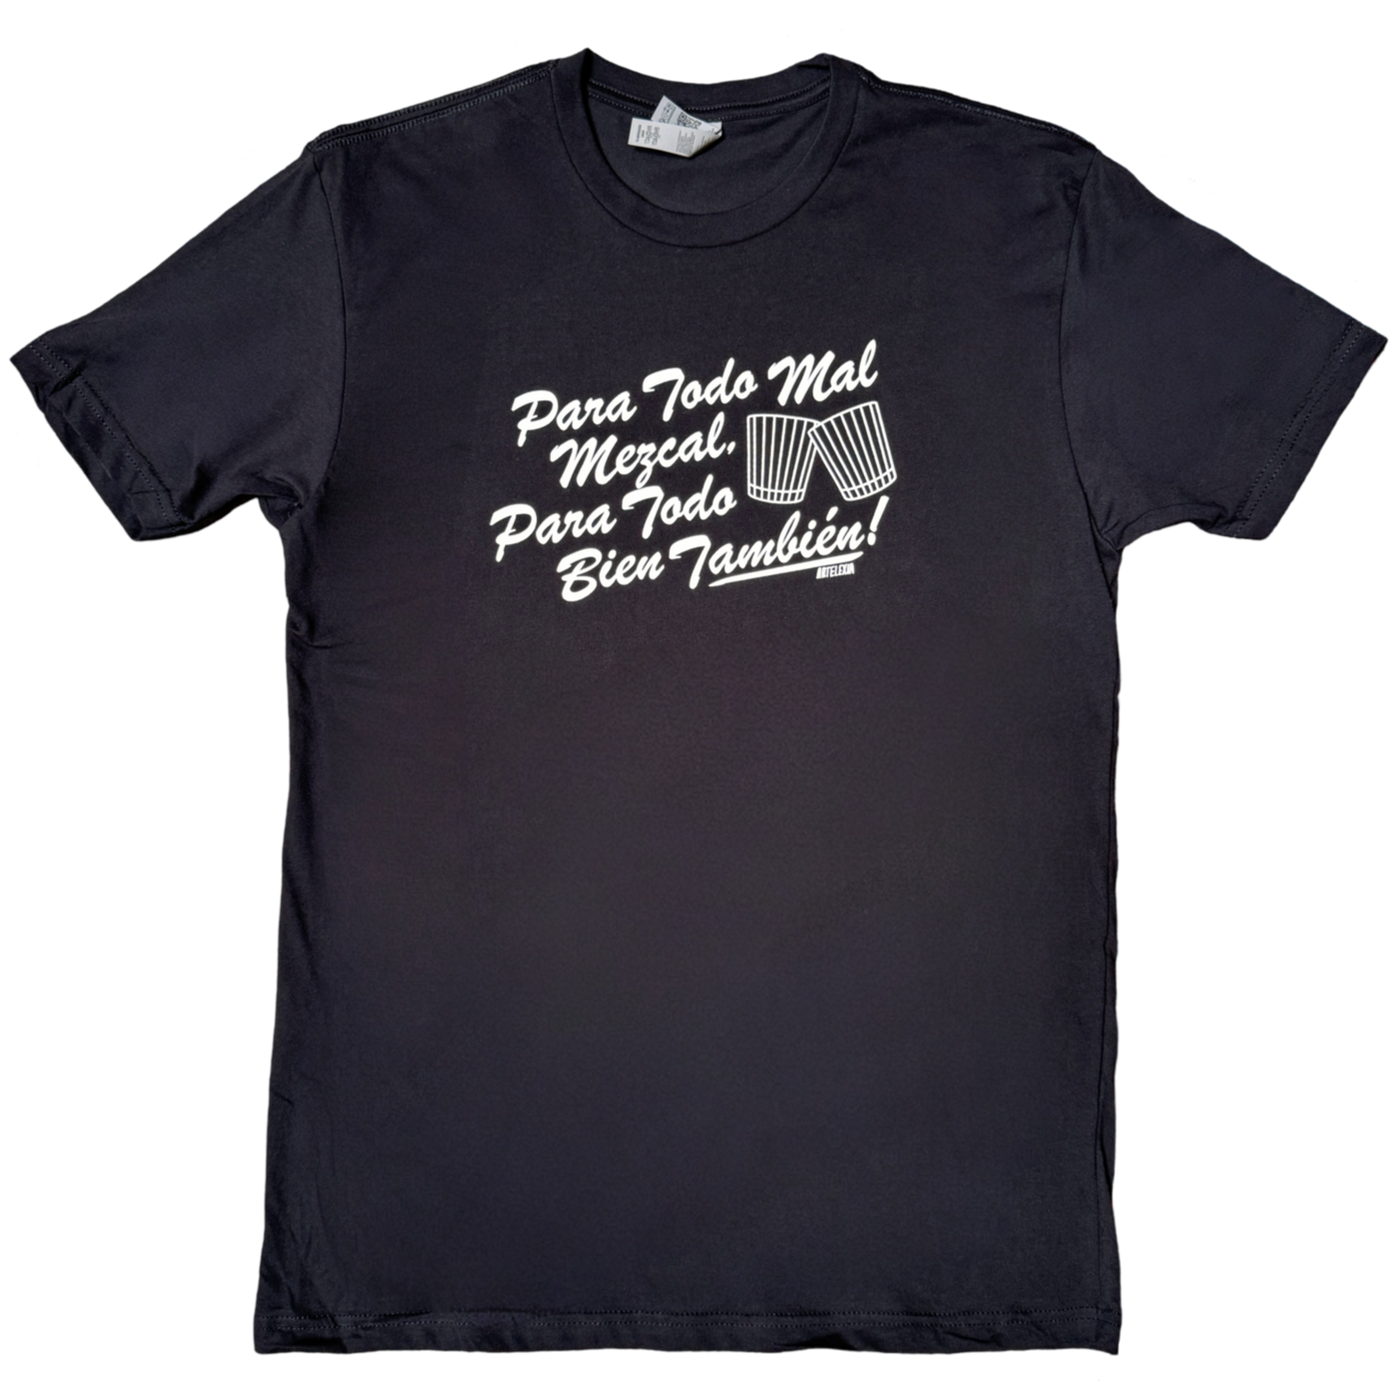 black tee shirt with white text on front reading "Para Todo Mal Mezcal, Para Todo Bien También" in script lettering